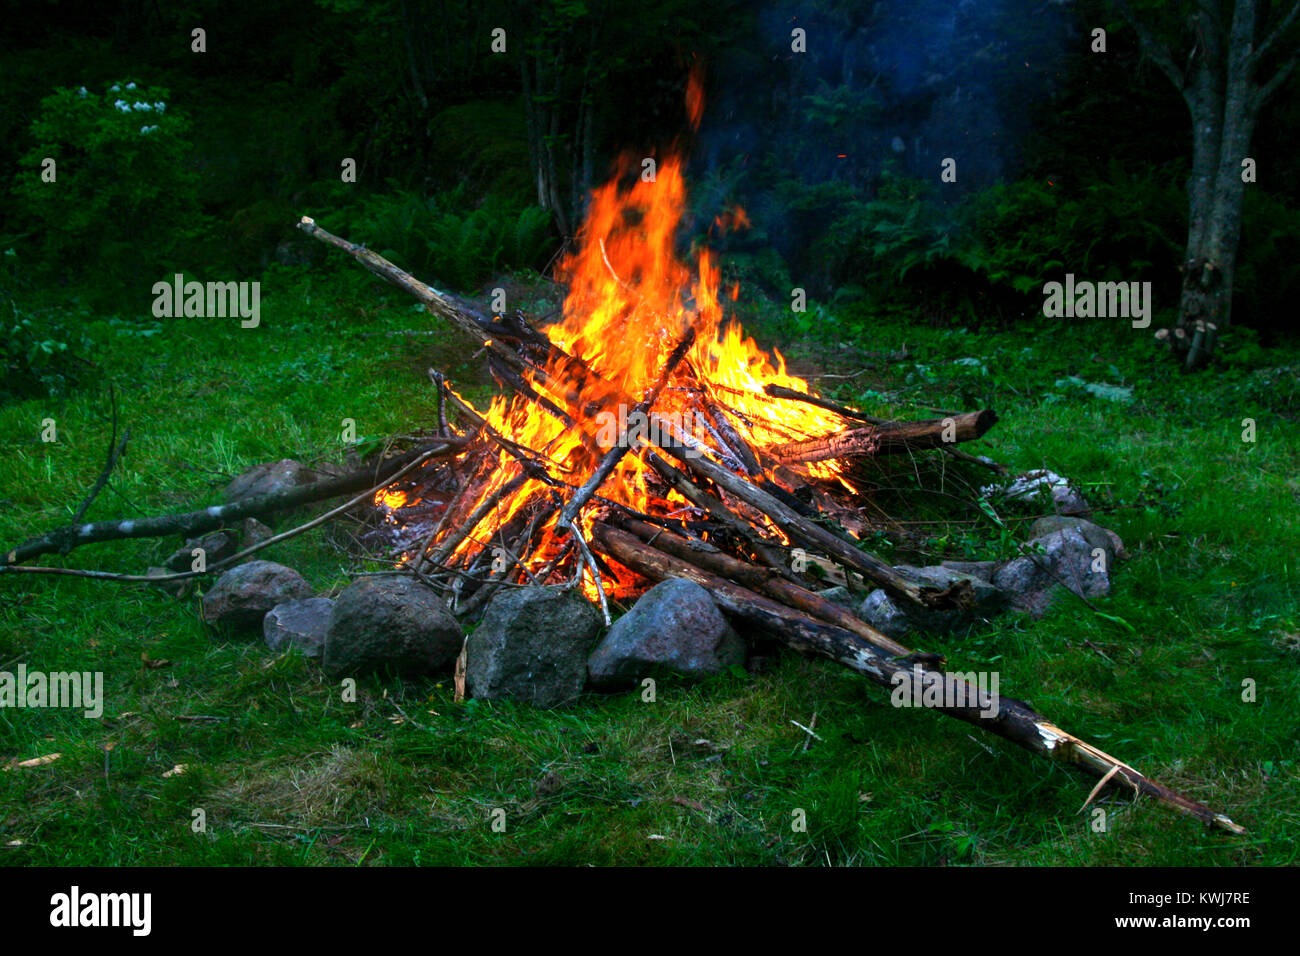 Bonfire - Celebrating Midsummer at camping site Stock Photo